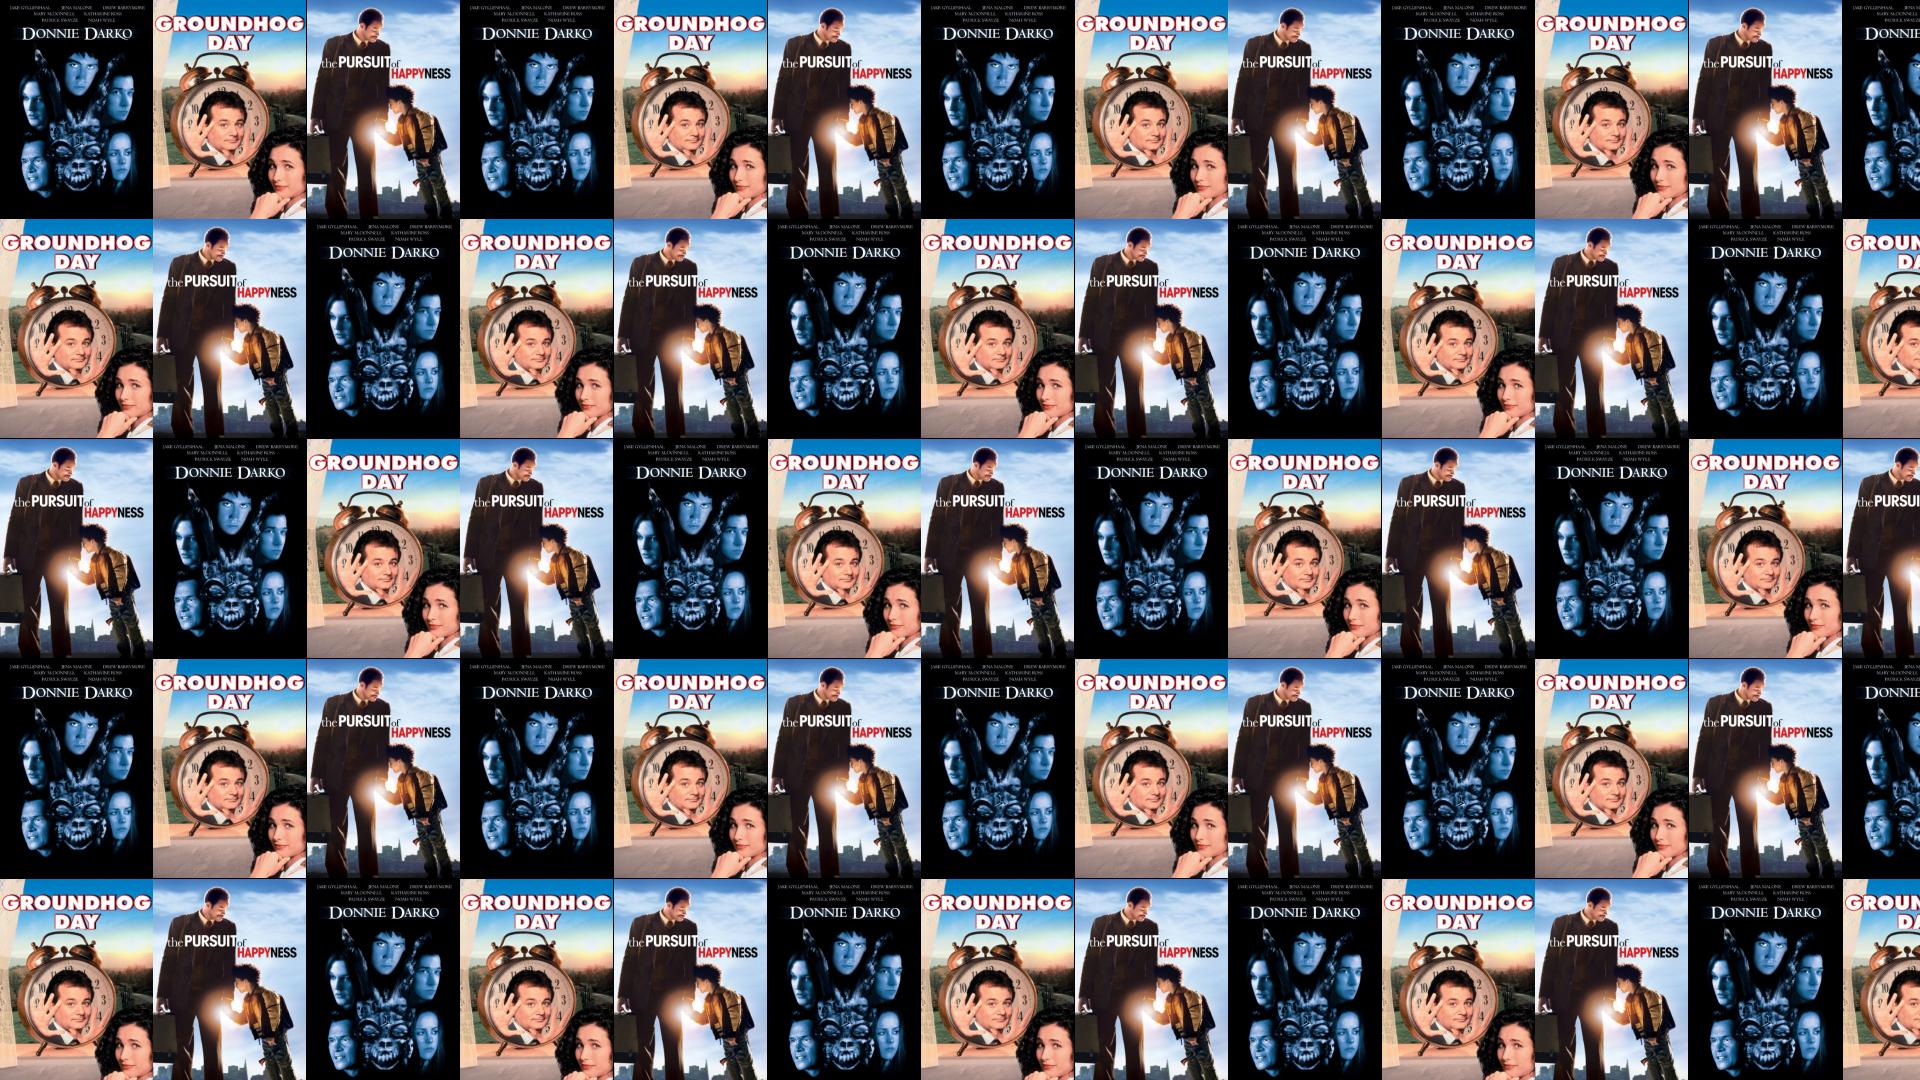 Free download Donnie Darko Groundhog Day Pursuit Happyness Wallpaper Tiled  [1920x1080] for your Desktop, Mobile & Tablet | Explore 50+ Free Groundhog  Day Wallpaper | Free Labor Day Wallpaper, Valentines Day Free